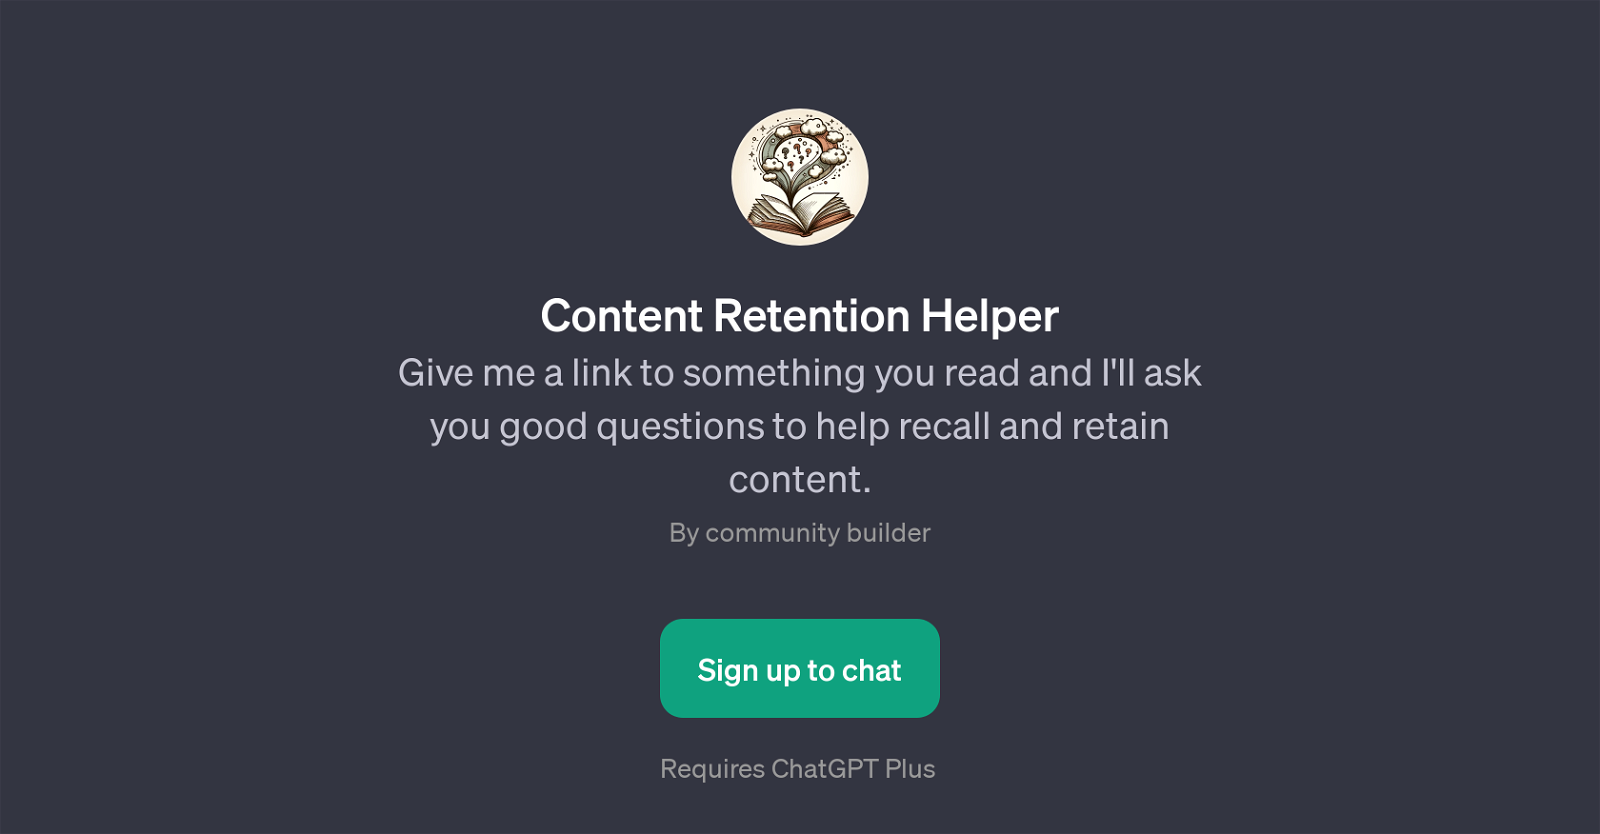 Content Retention Helper website